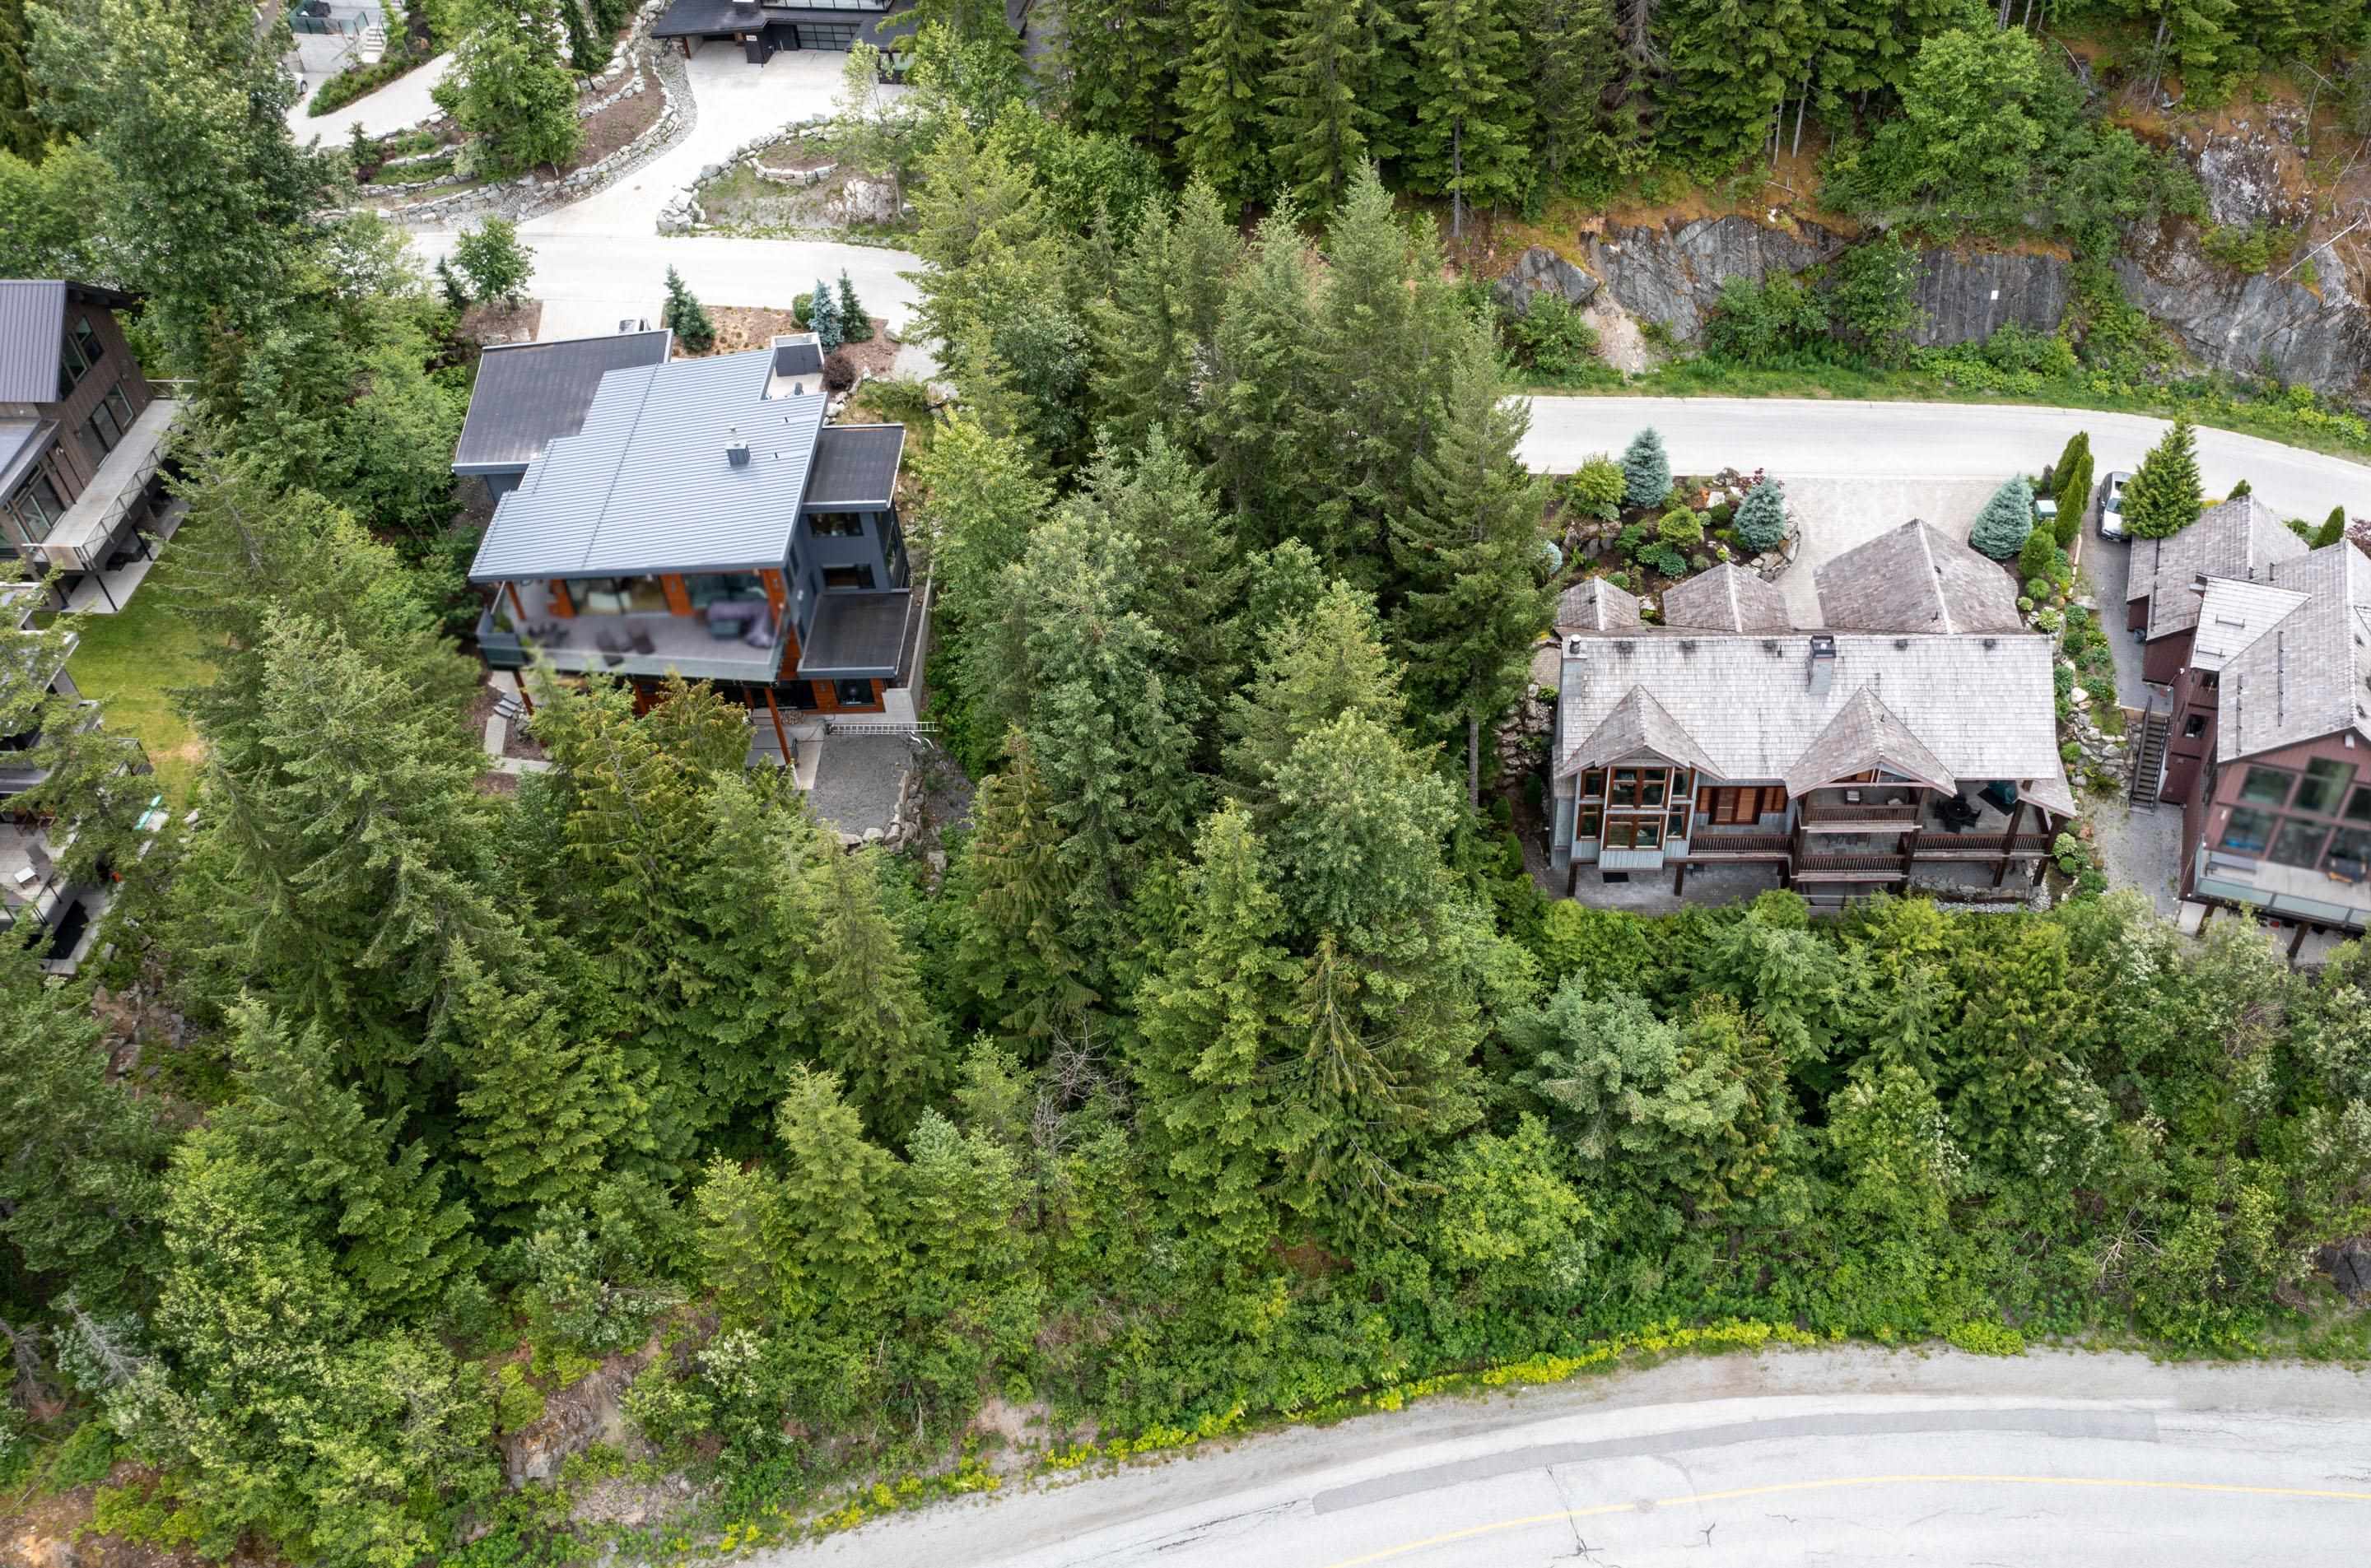 1565 TYNEBRIDGE, Whistler, British Columbia, ,Land Only,For Sale,R2763984